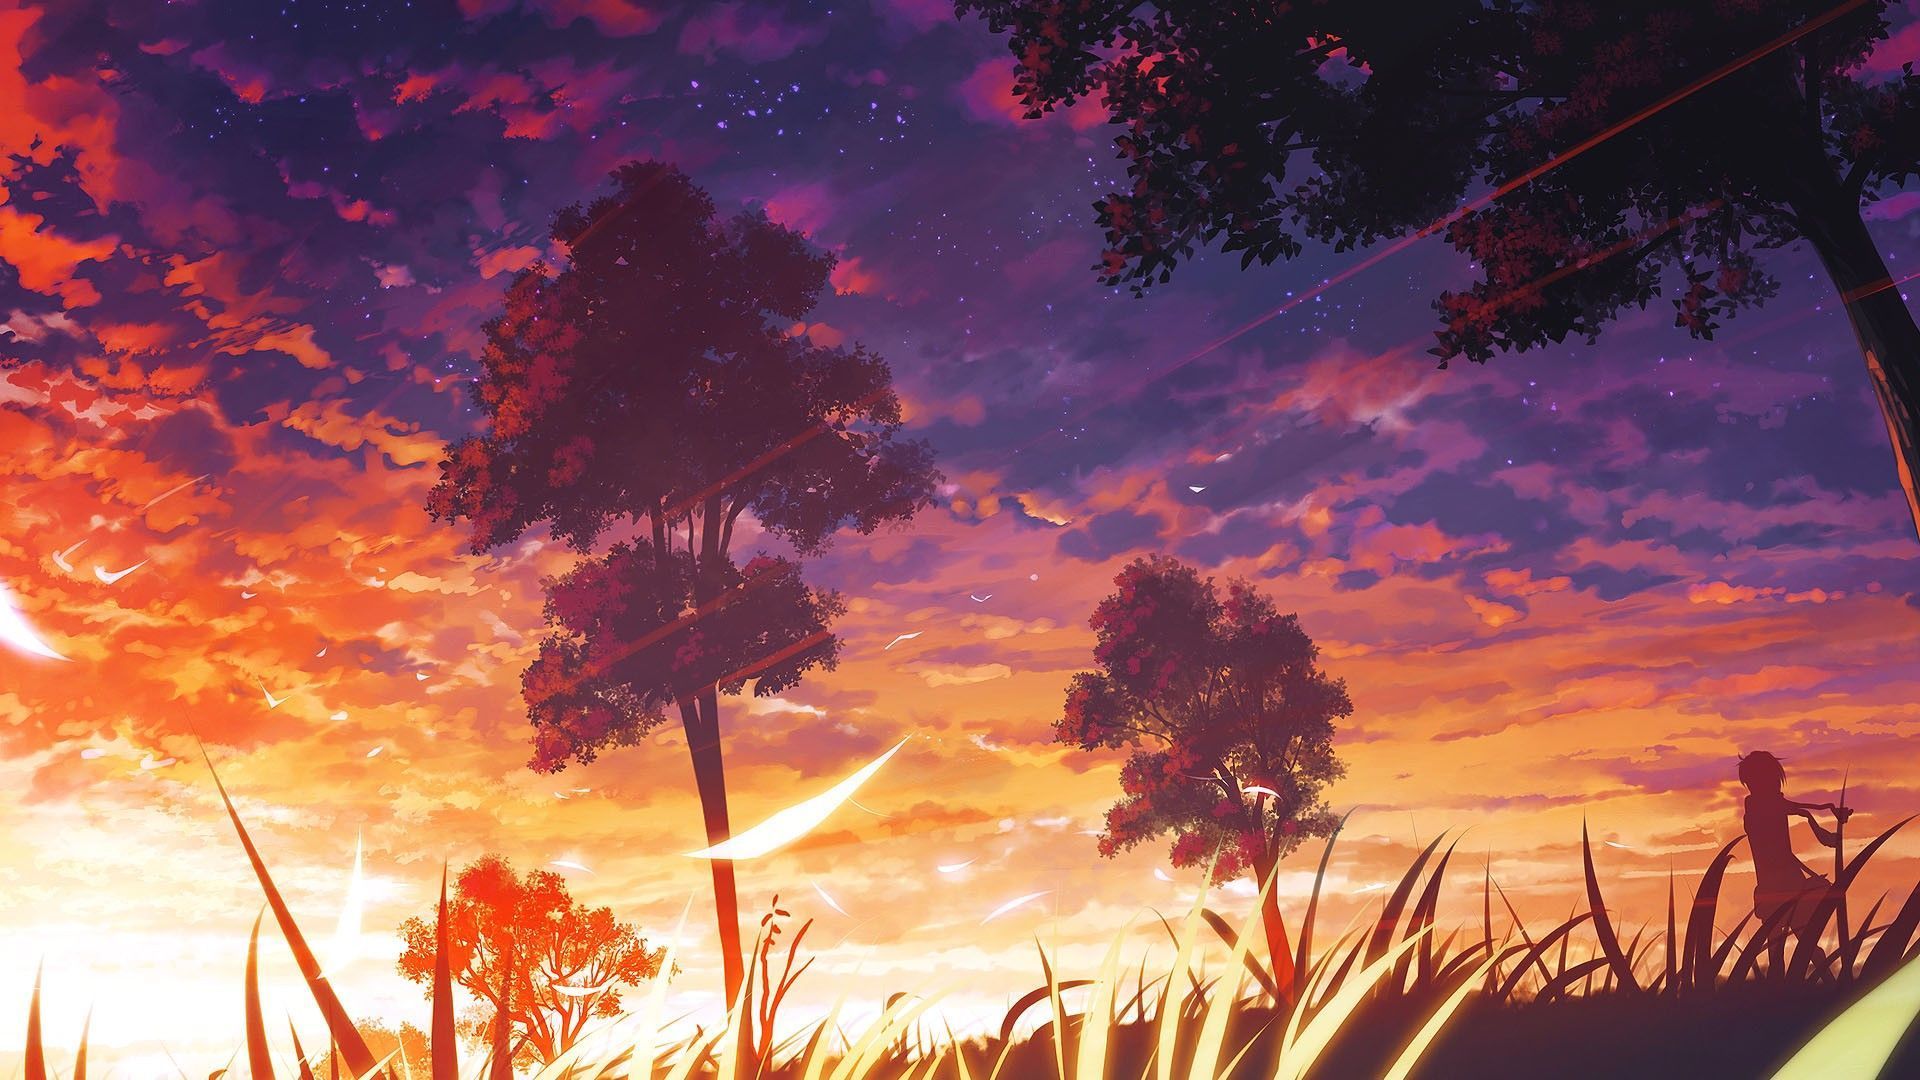 Anime Phone Photo HD. Scenery wallpaper, Anime scenery, Anime scenery wallpaper